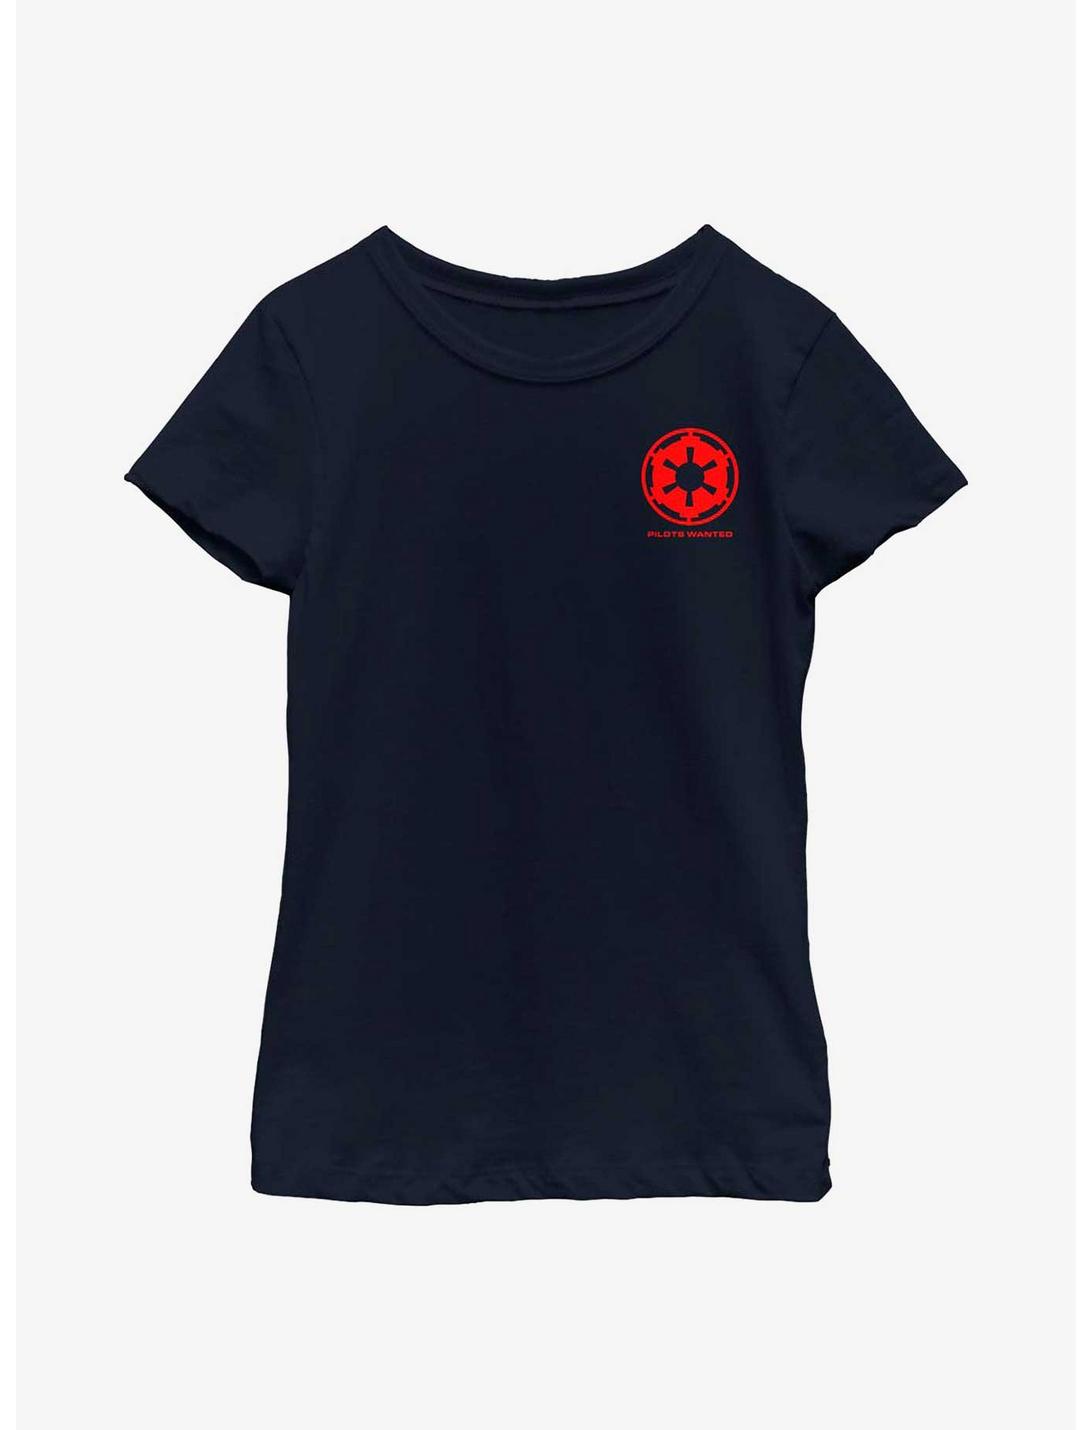 Star Wars Empire Logo Youth Girls T-Shirt, NAVY, hi-res